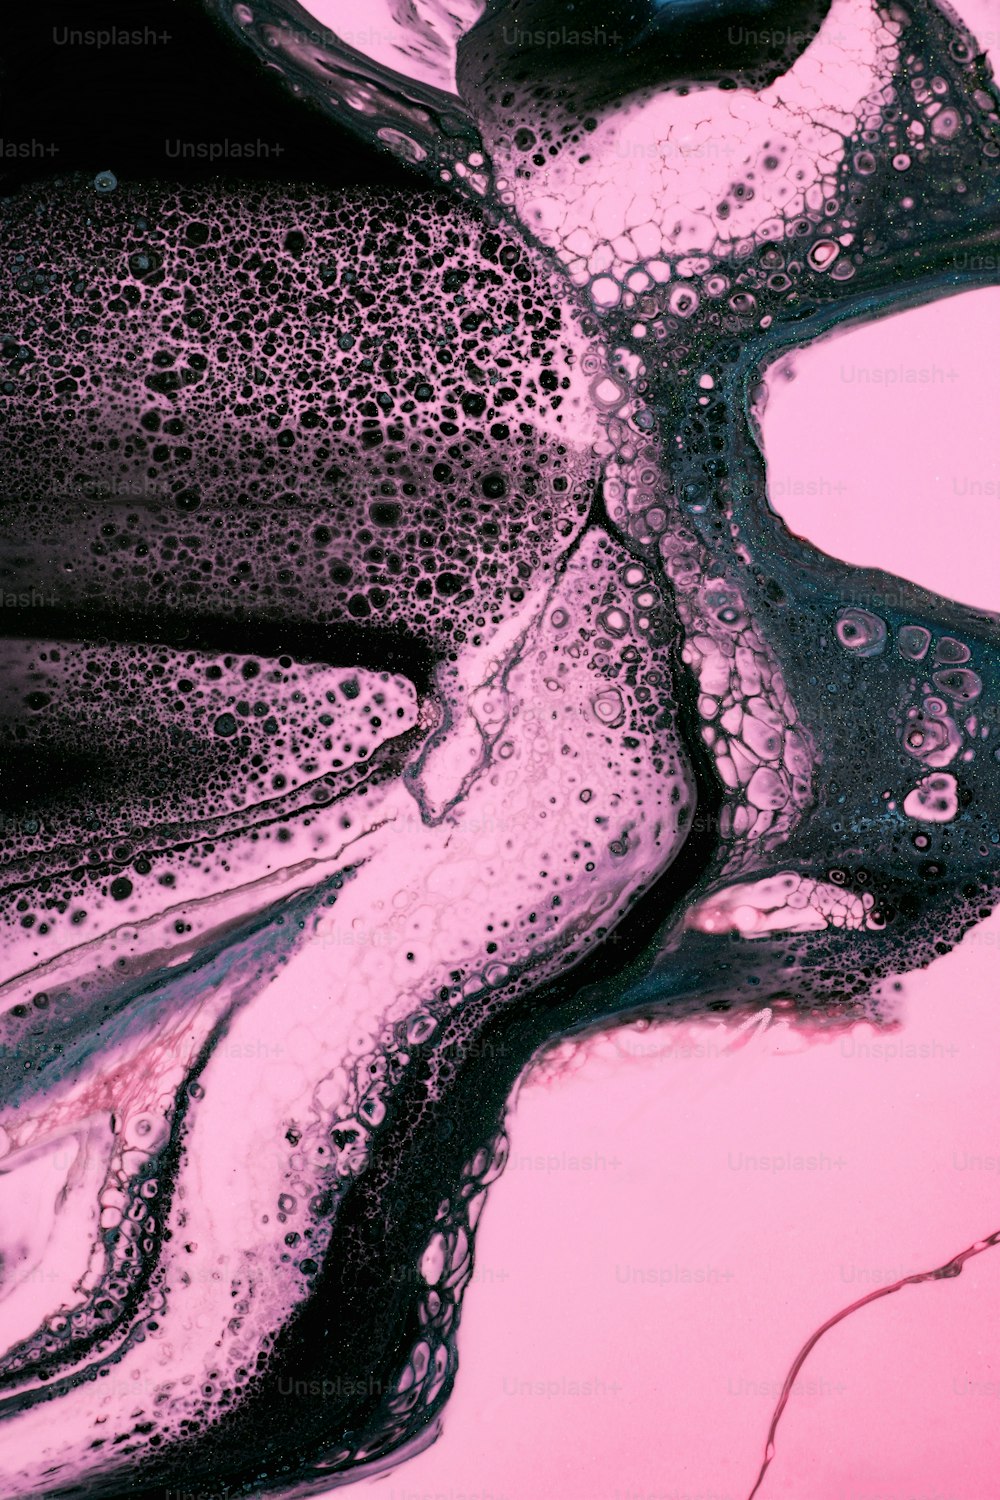 Un primer plano de burbujas de agua sobre una superficie rosada